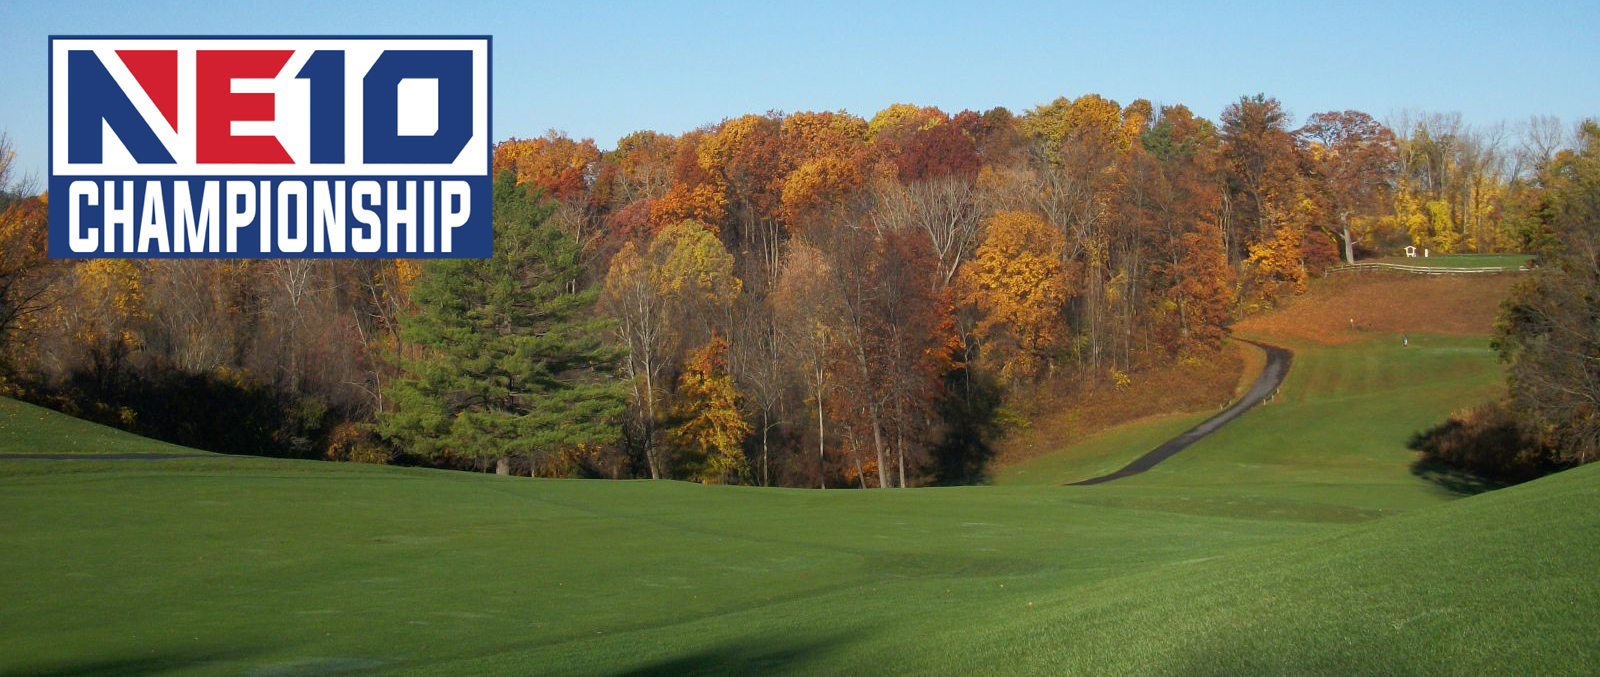 Golf course with NE10 Championship logo